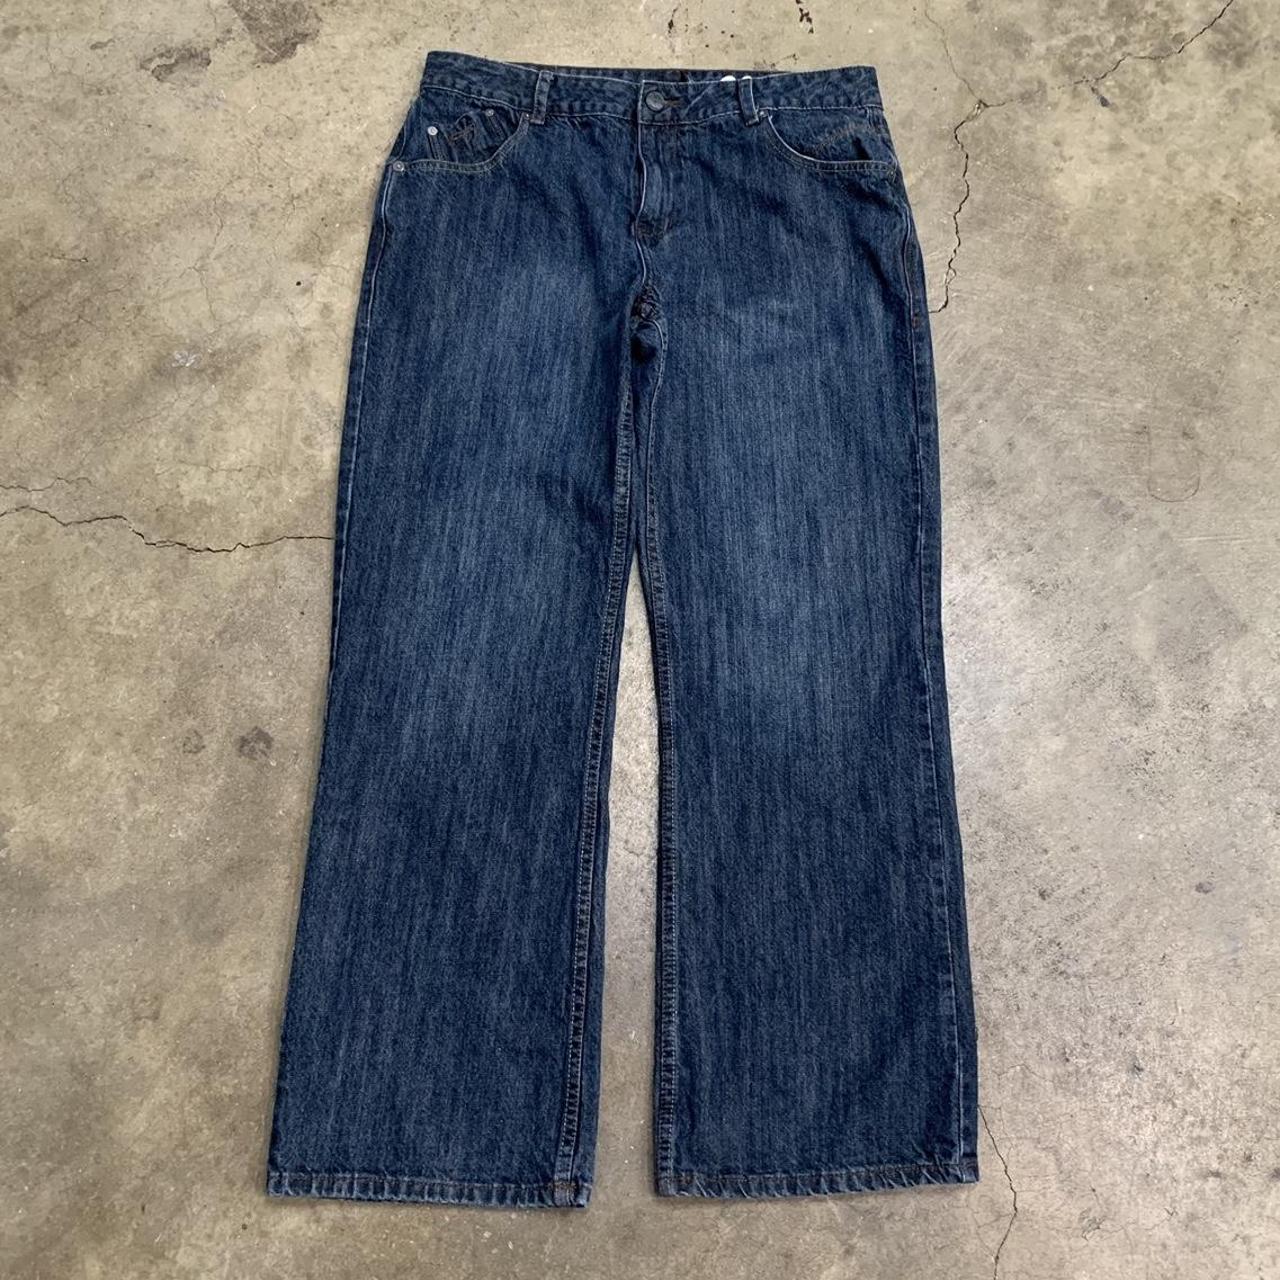 Y2K Ezekiel jeans in good condition No flaws Size... - Depop